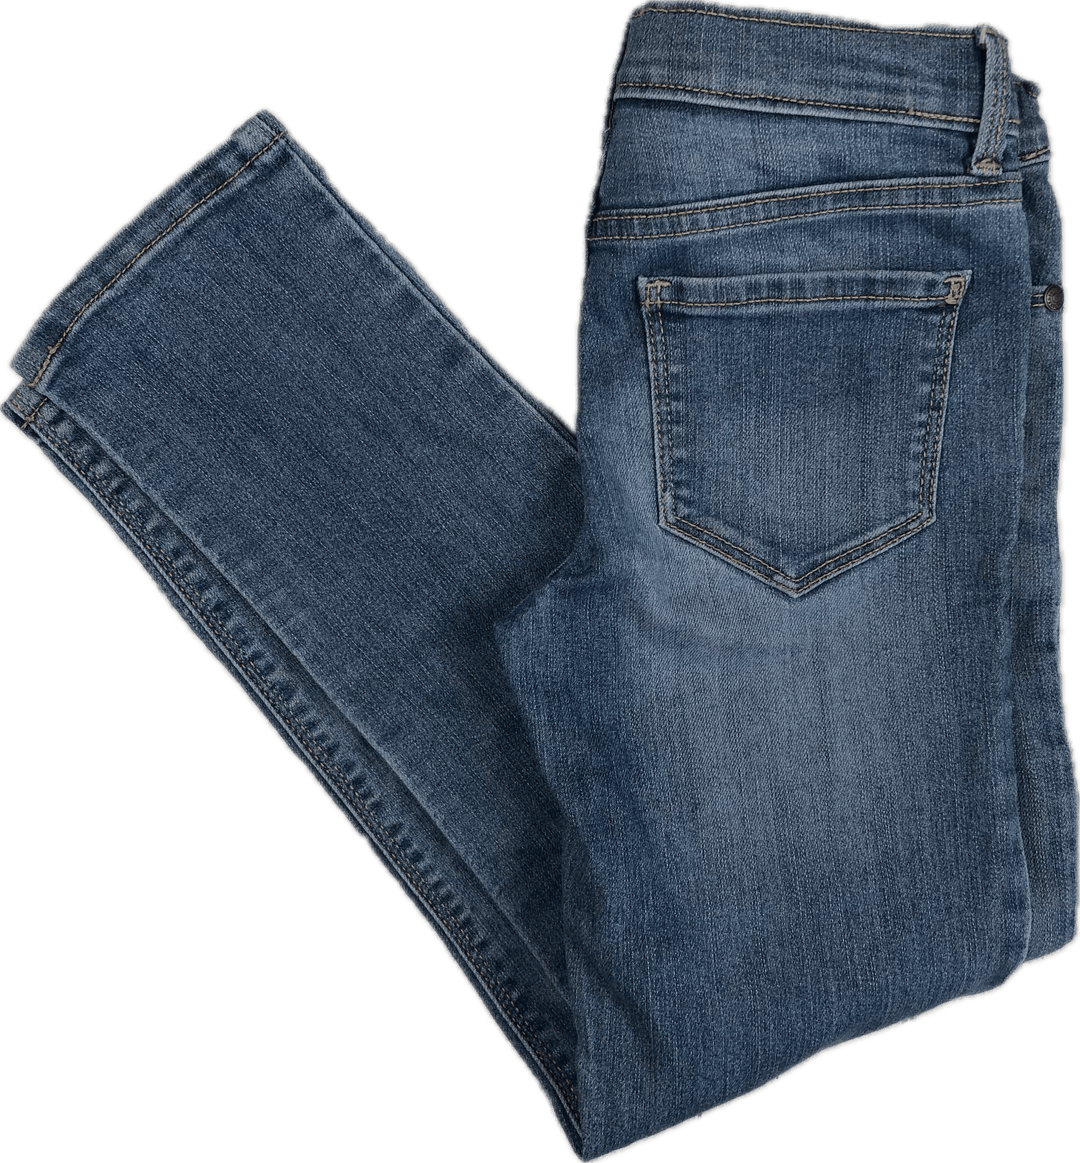 Osh Kosh B'gosh 'Skinny' Jeans - Size 7 - Jean Pool